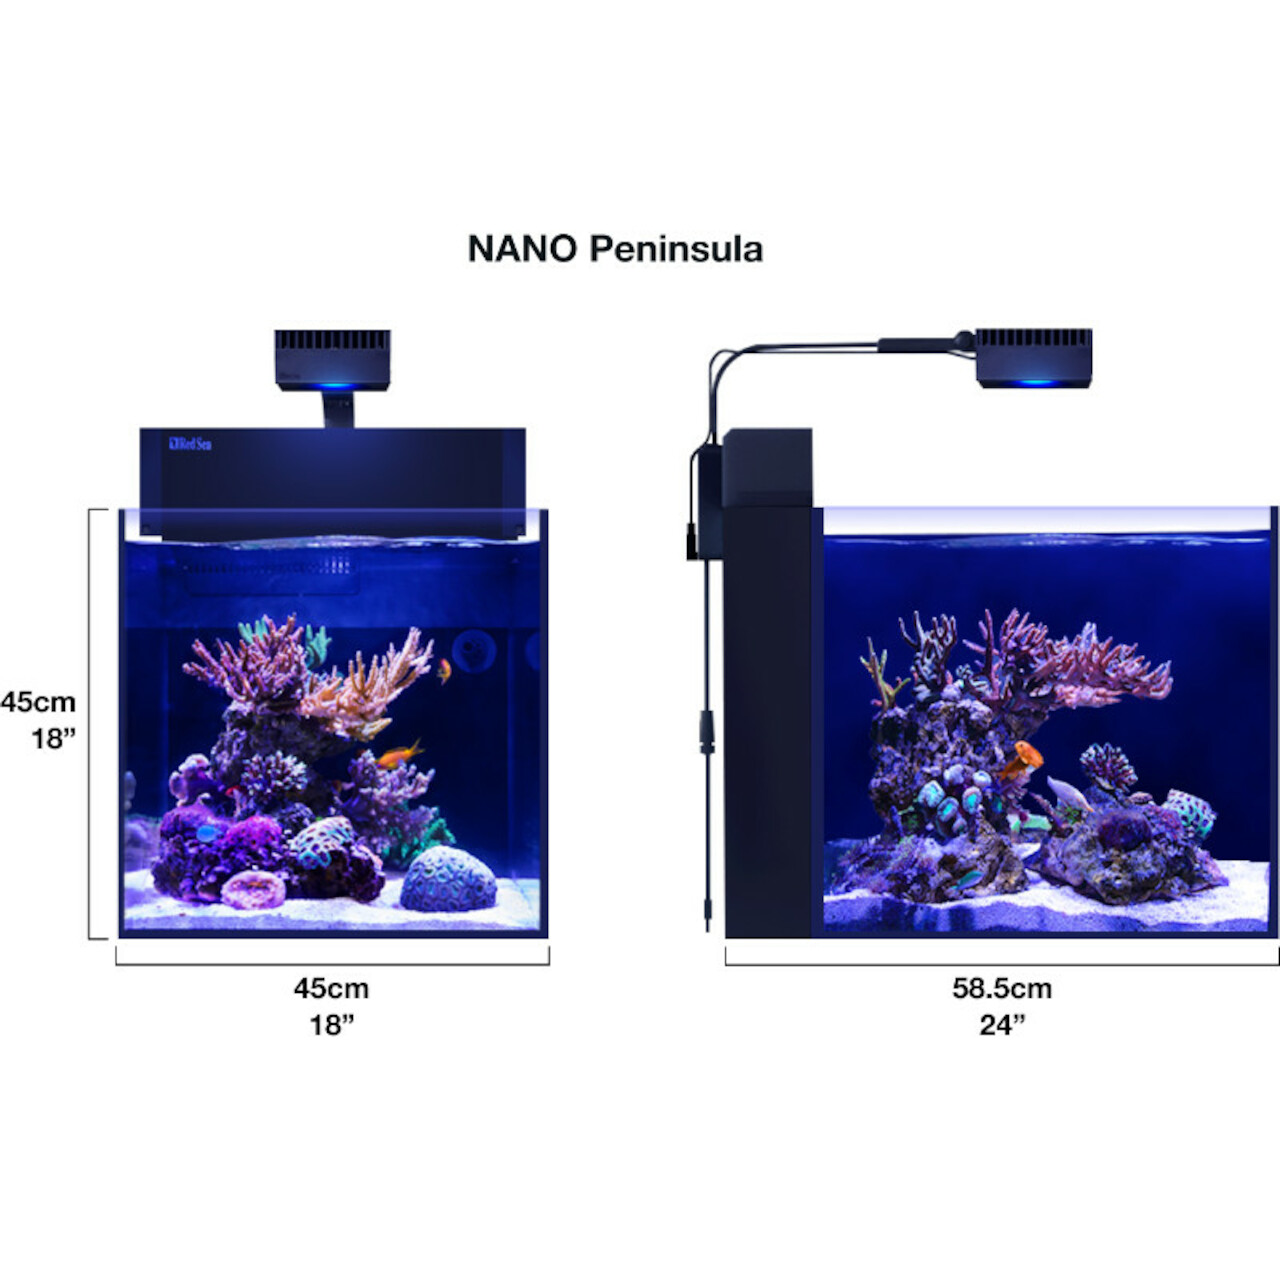 Red Sea Max Nano Peninsula G2 Aquarium